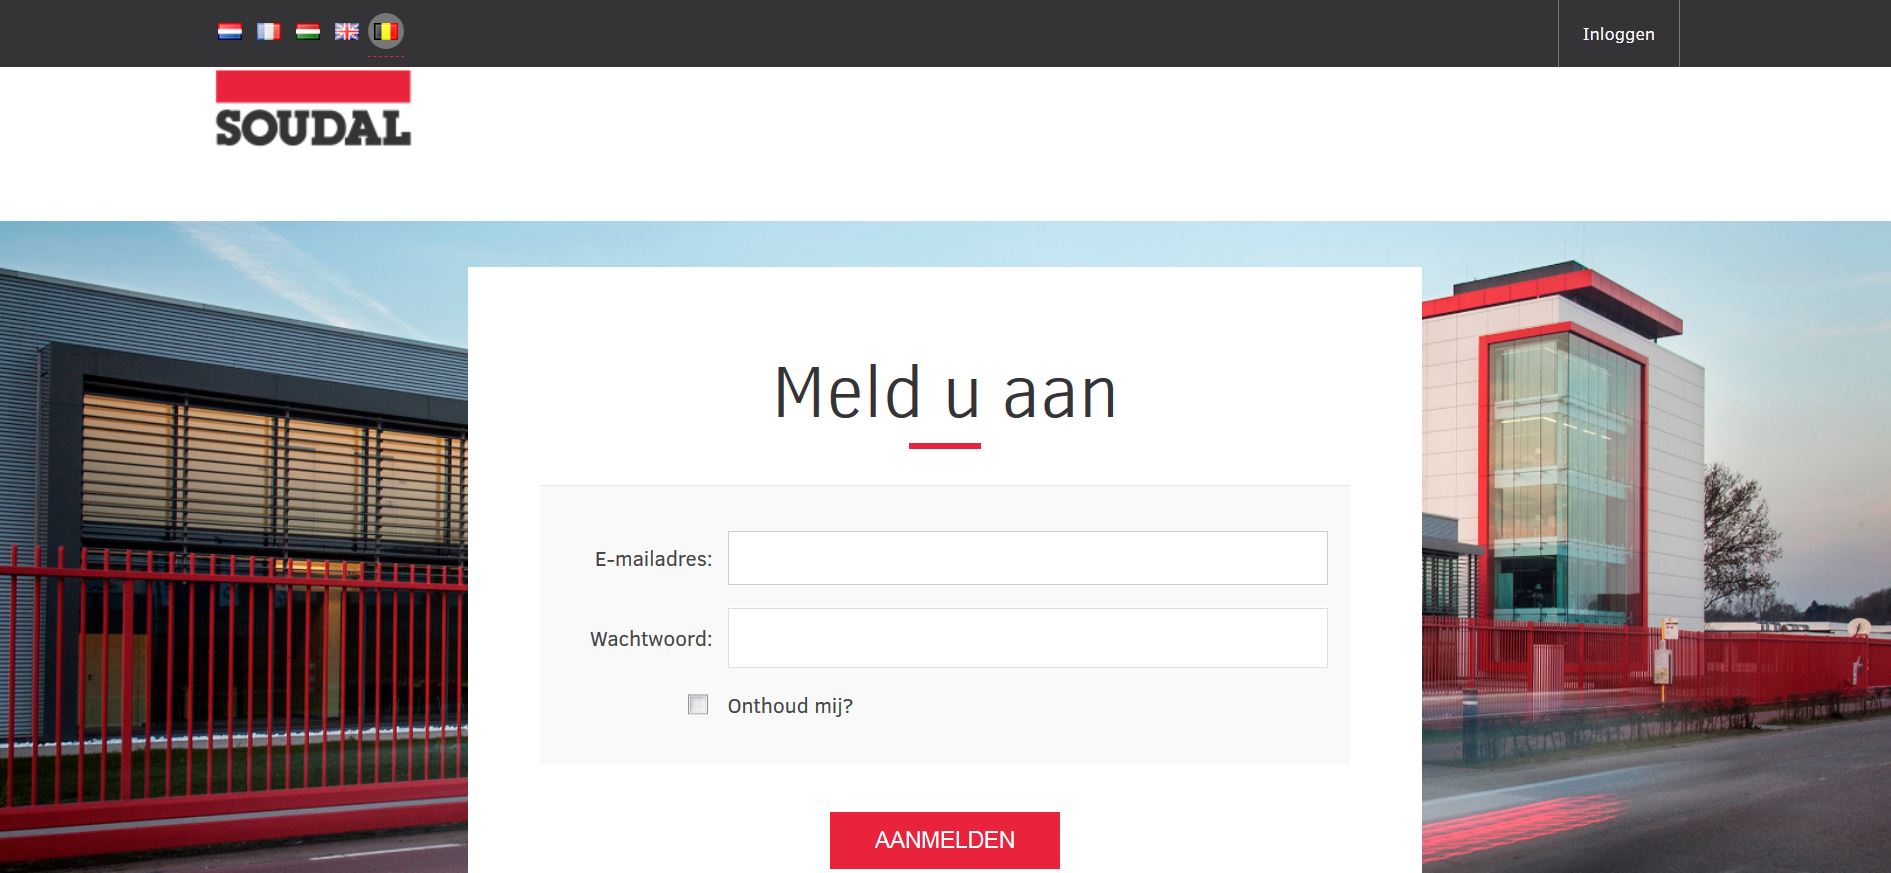 Soudal B2B webshop NL